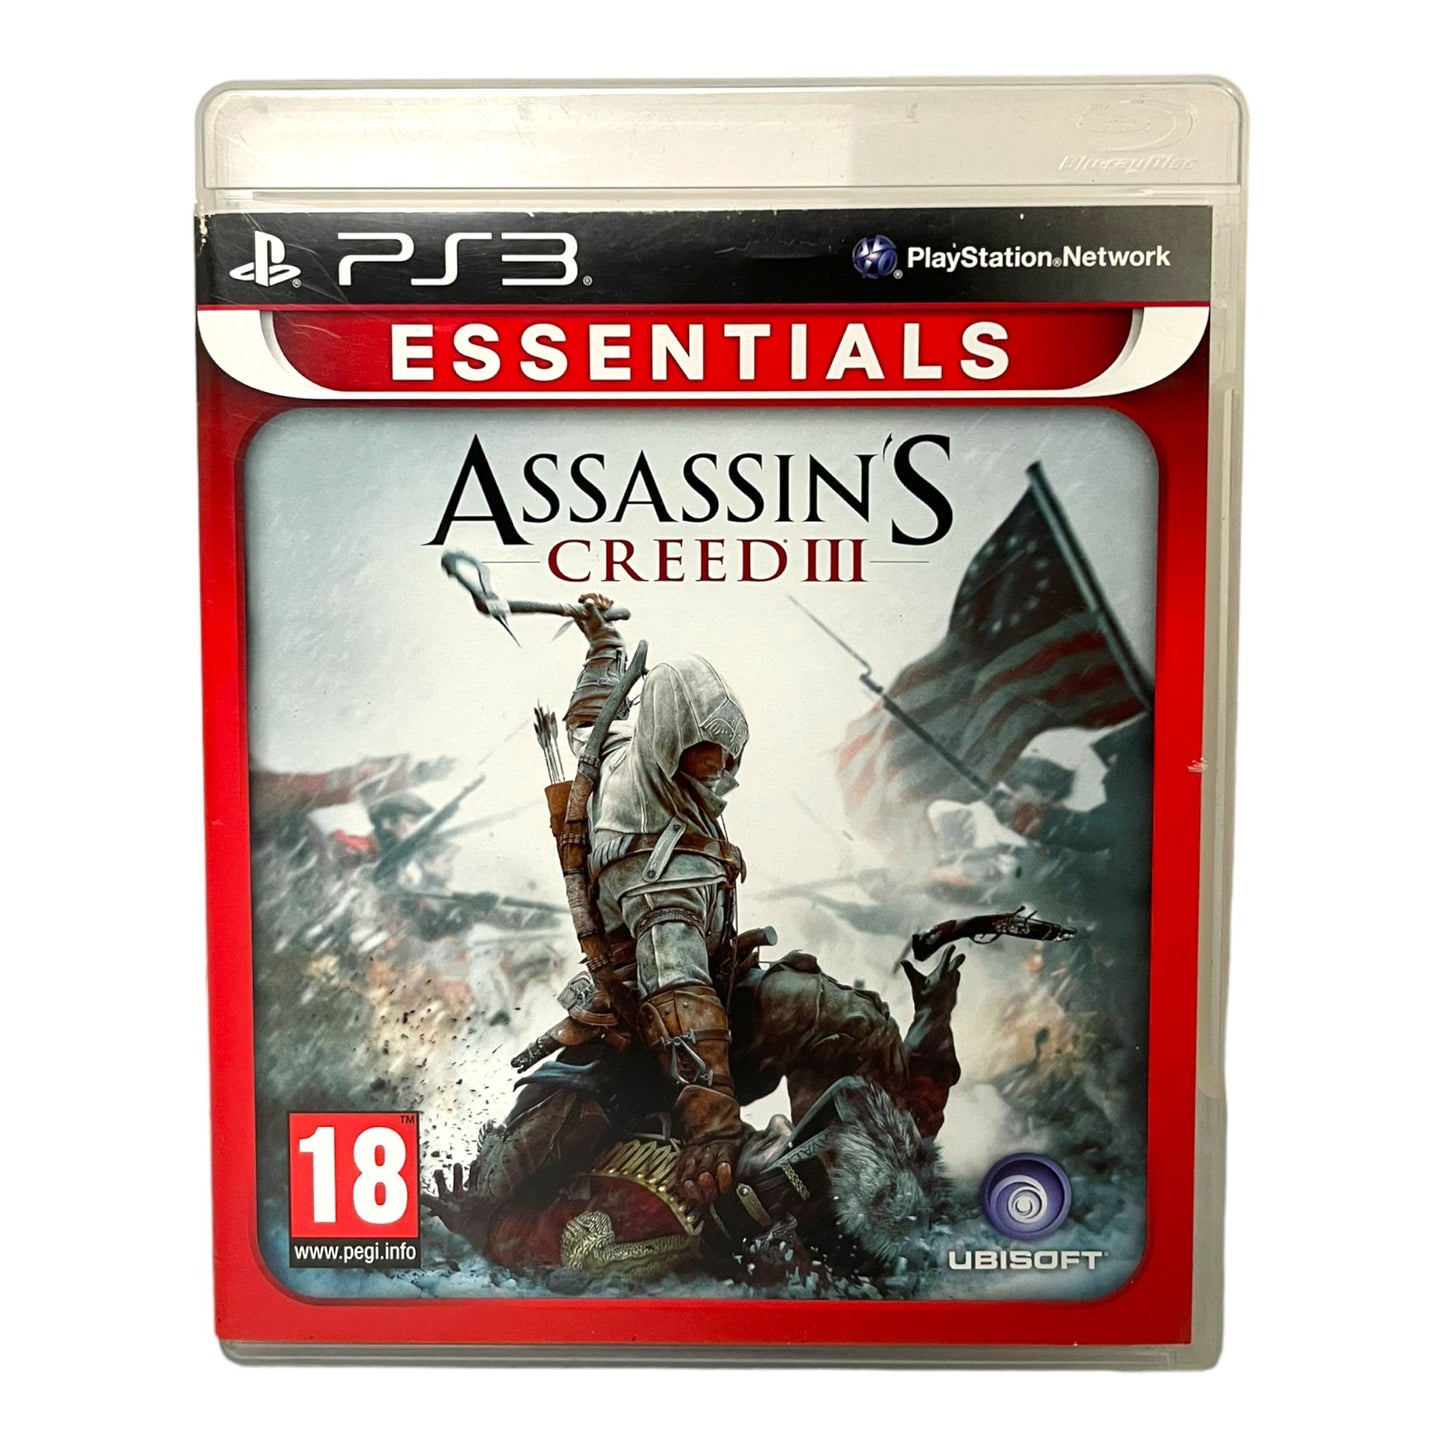 Assassin's Creed III - Essentials